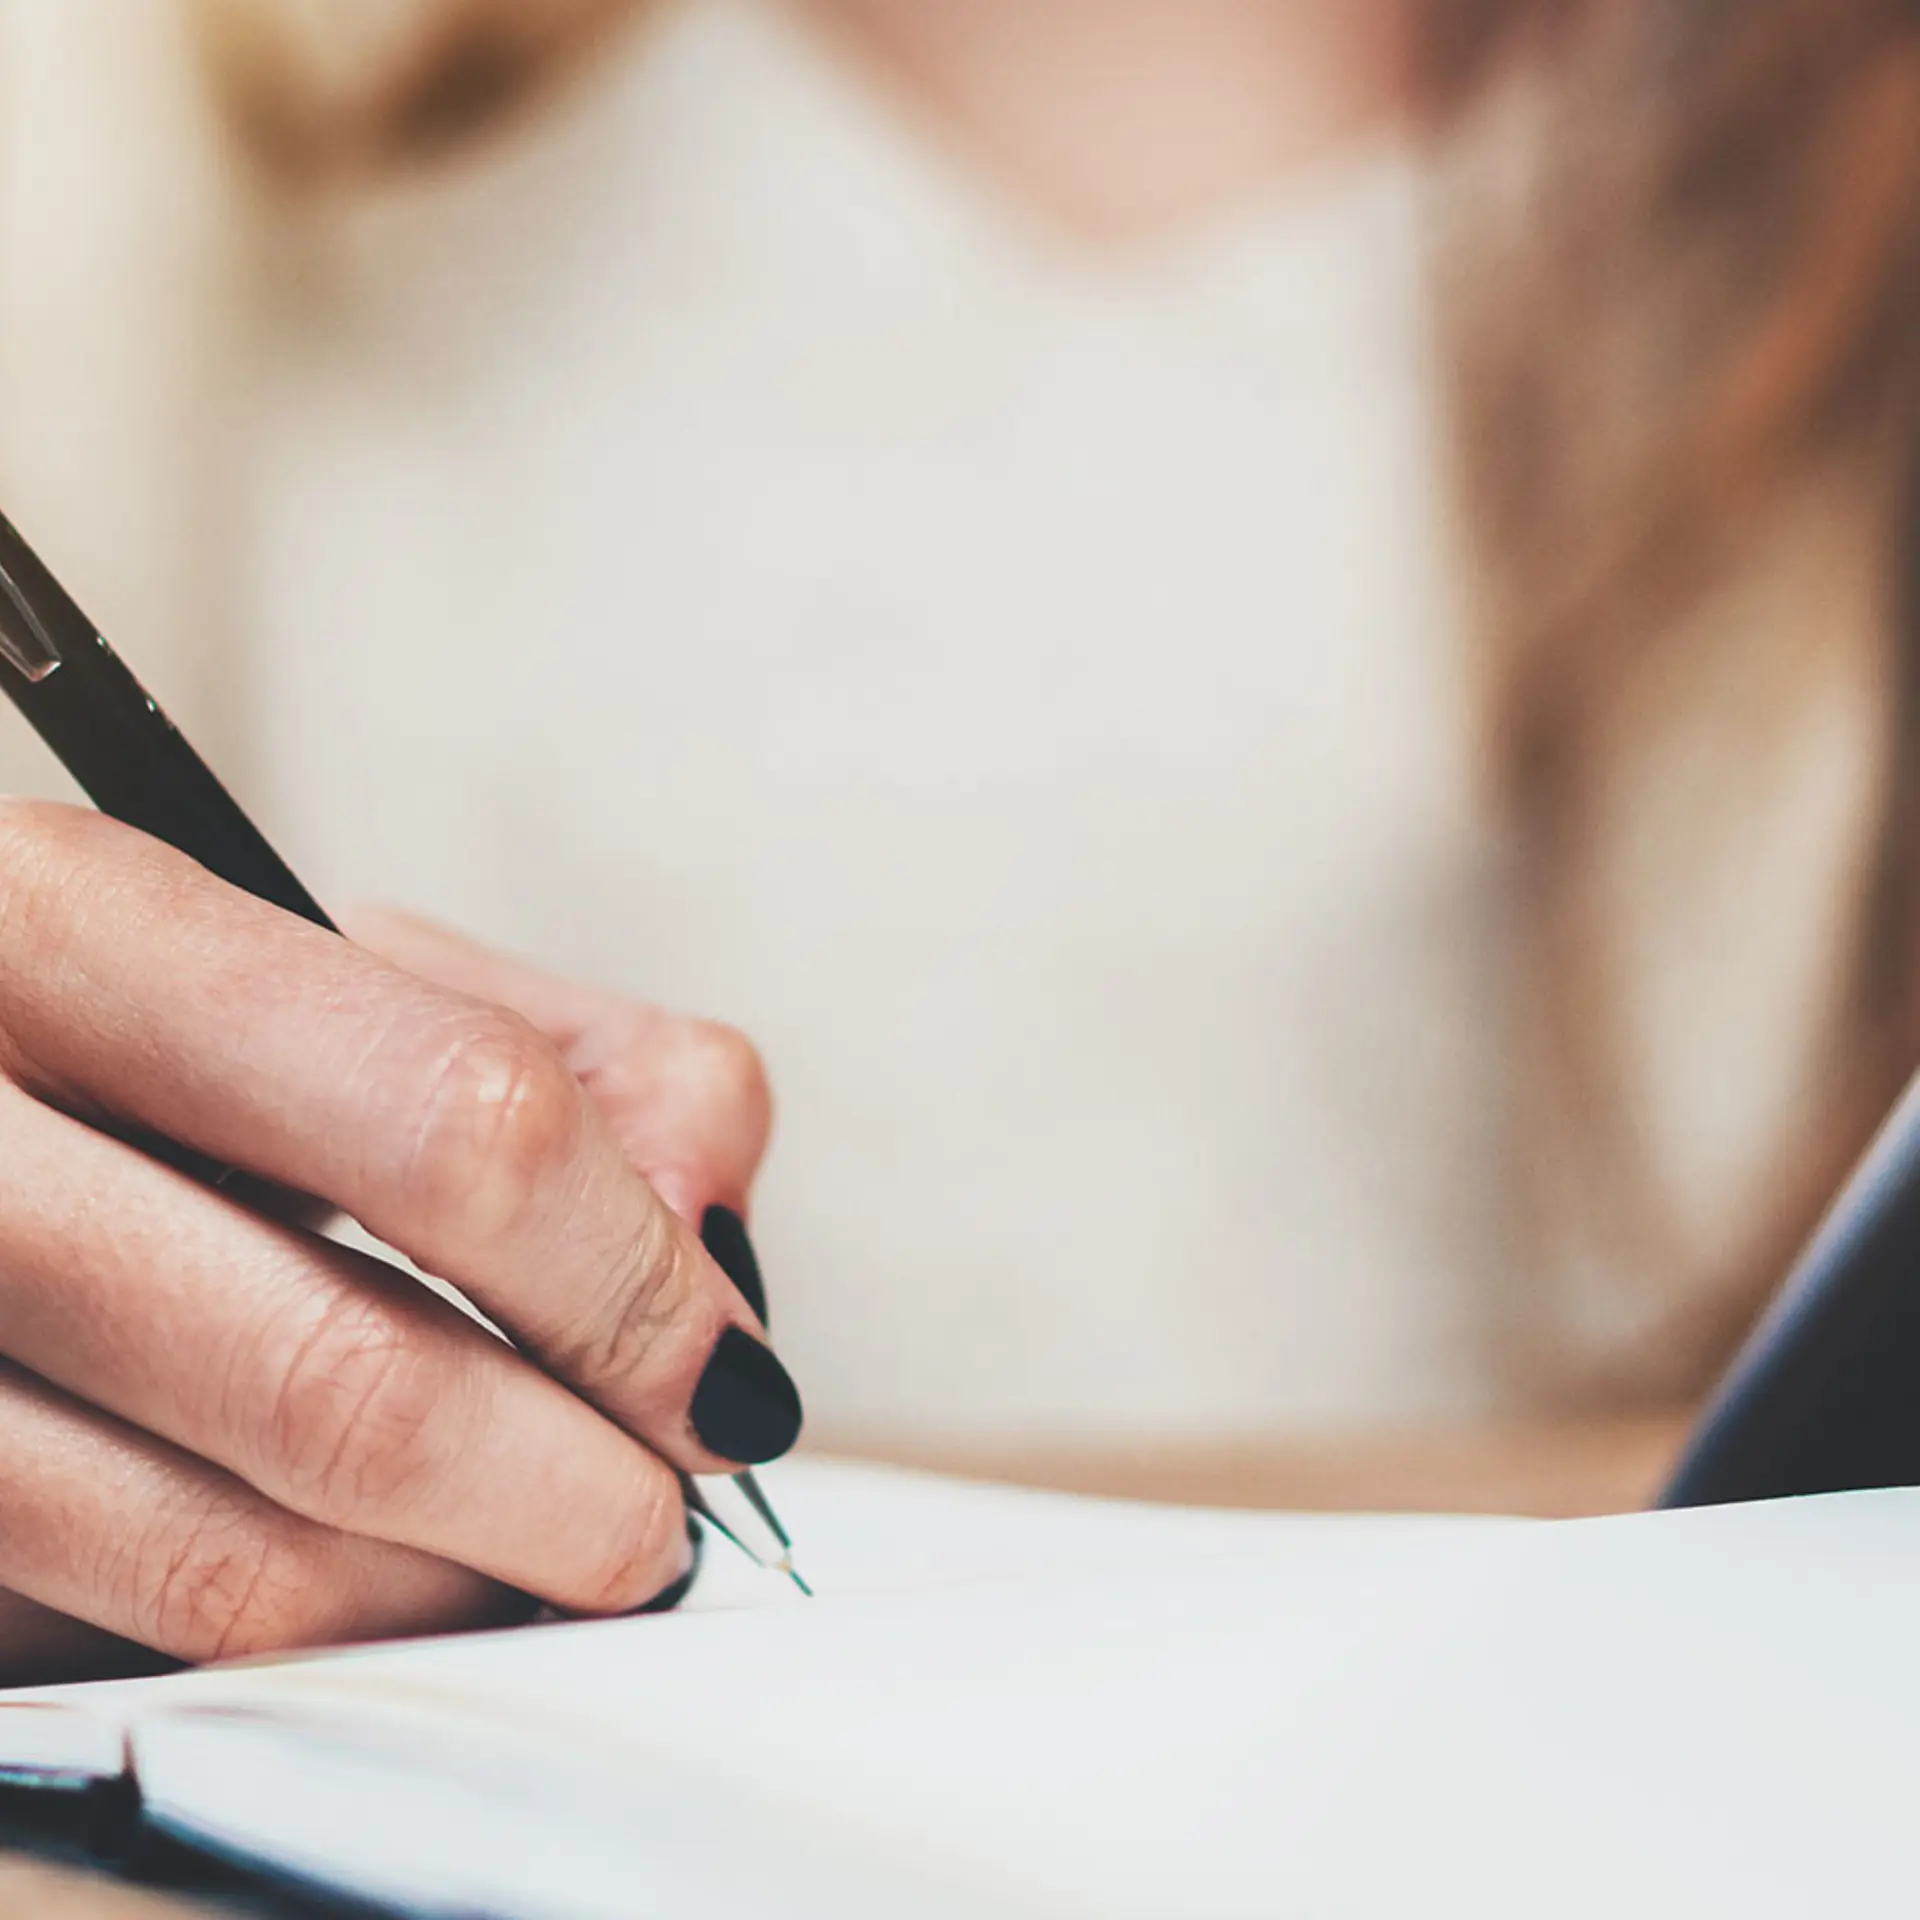 Kvinde med løst hår og sort neglelak skriver i sin notesbog. Med sin venstre hånd holder hun på et dokument. 